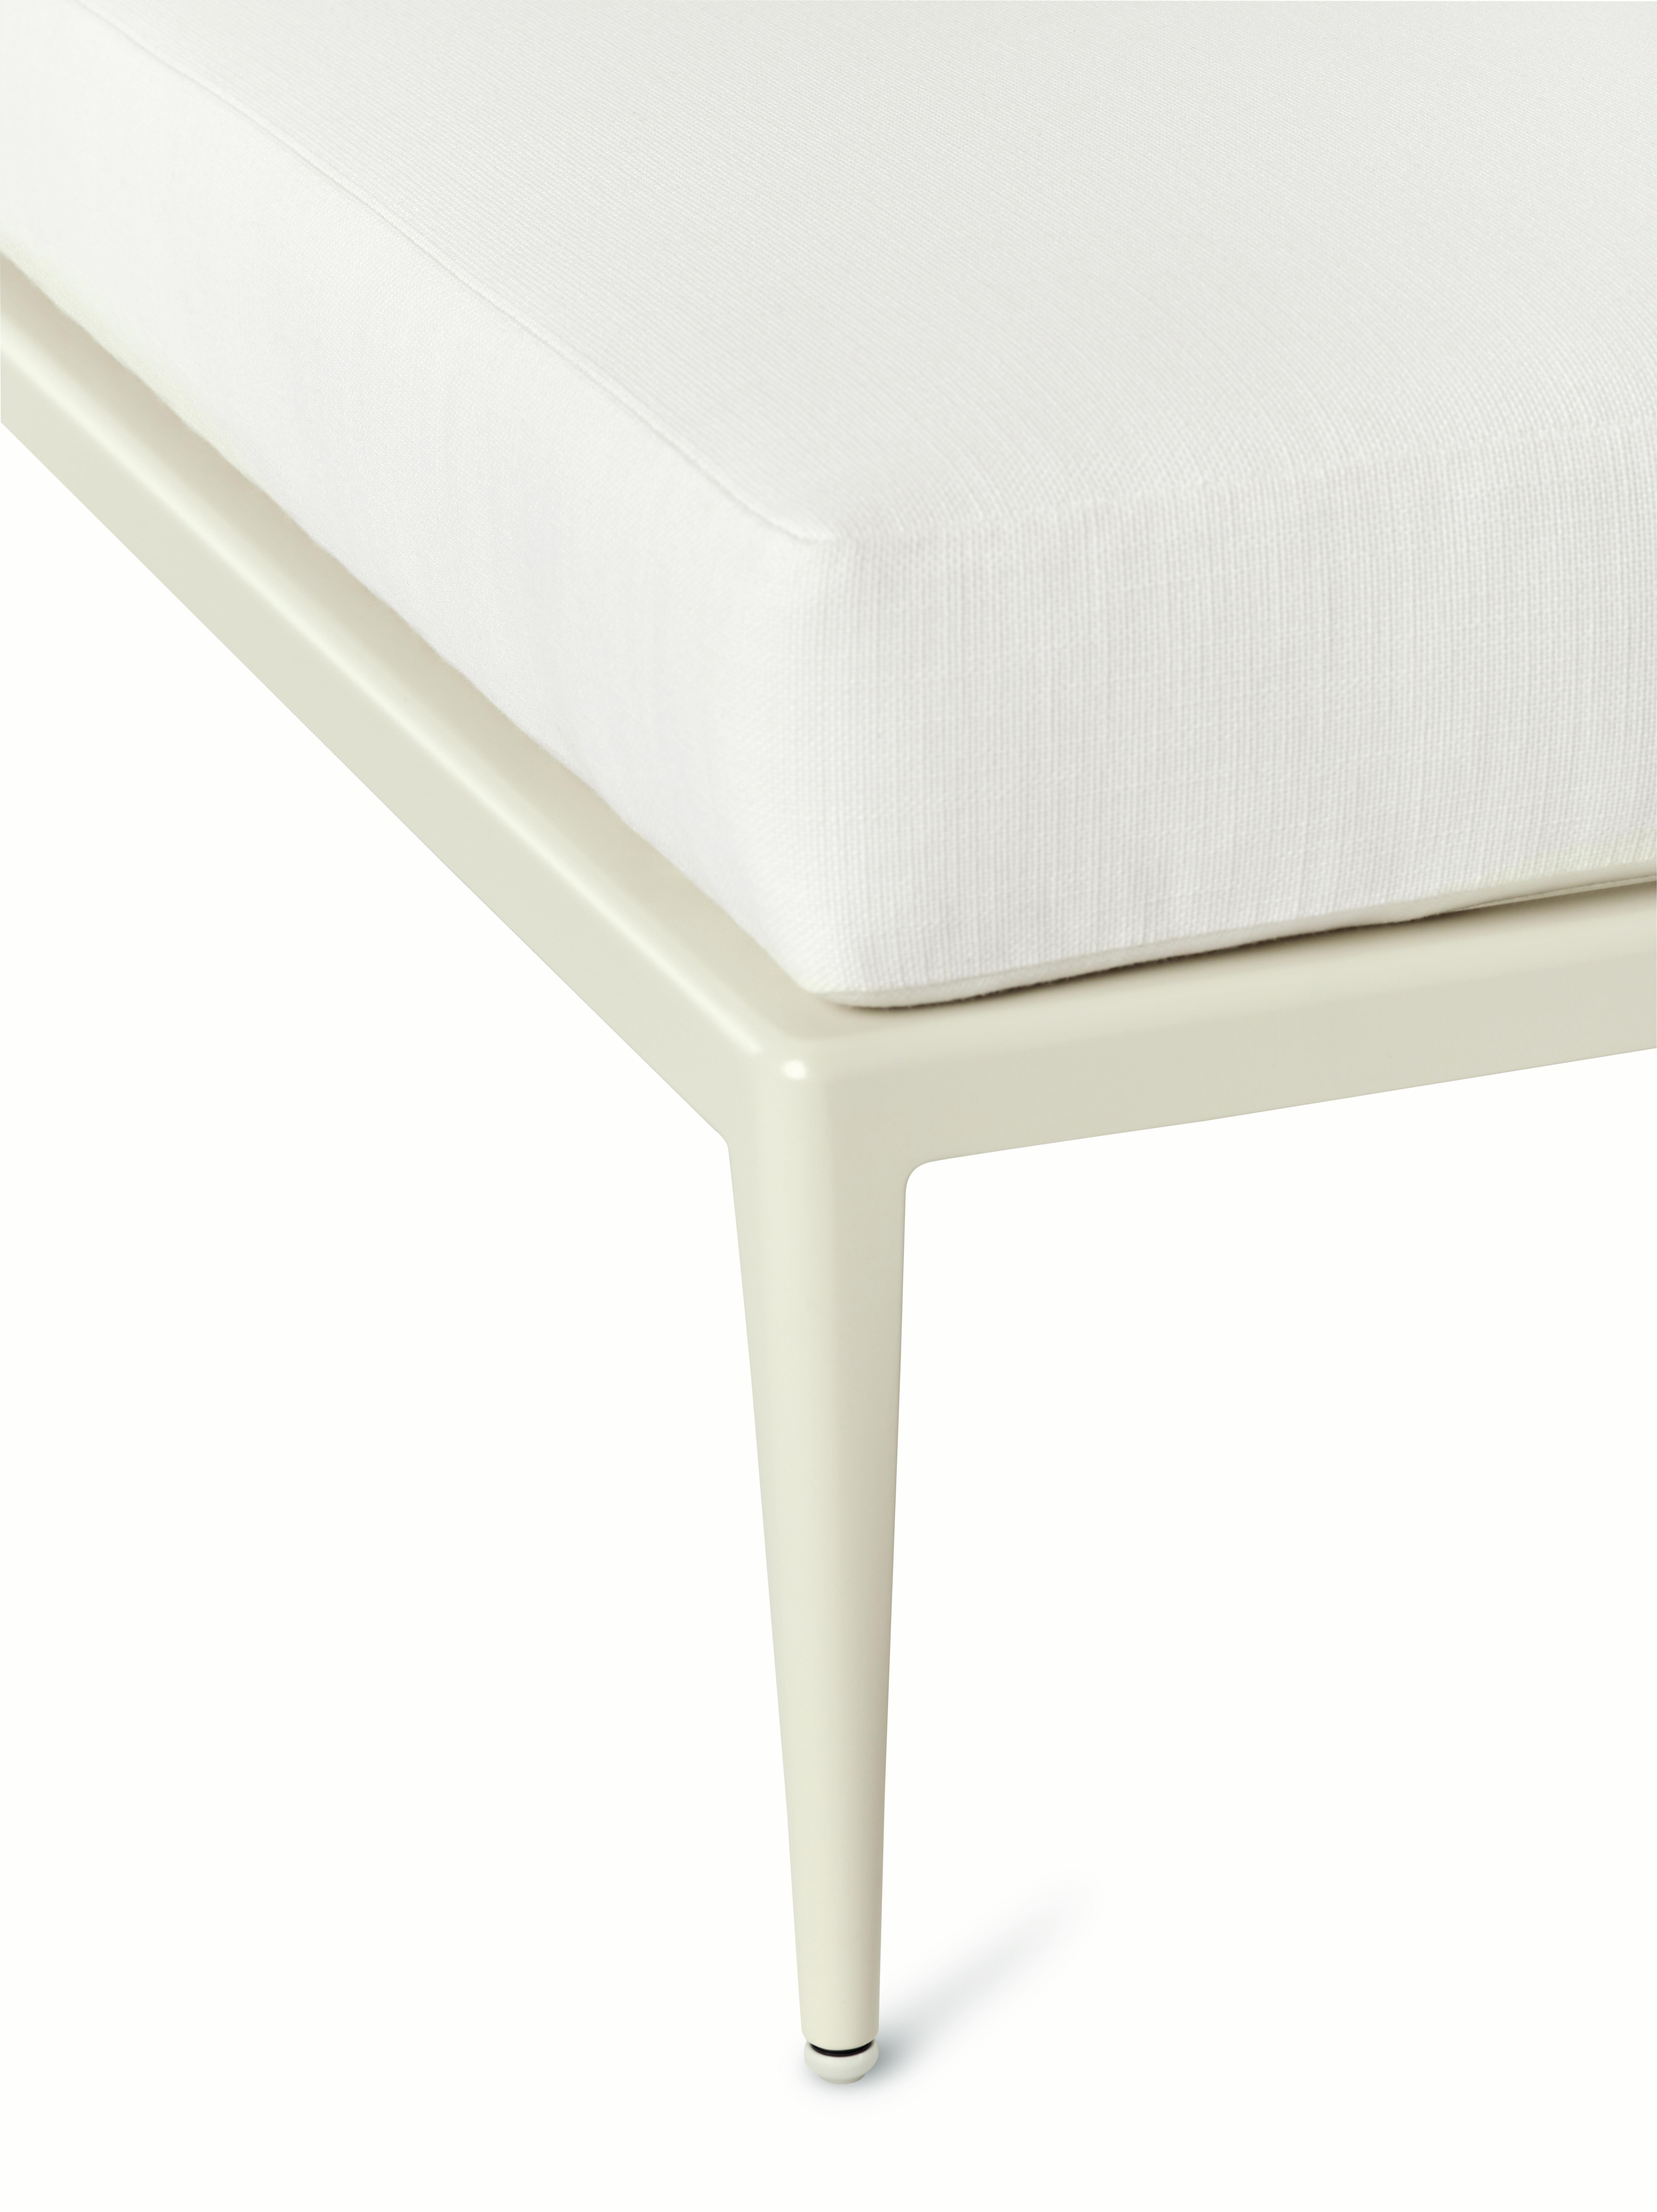 Contemporary McKinnon and Harris Outdoor Furniture deCamp Sun Chaise Classic White finish  For Sale